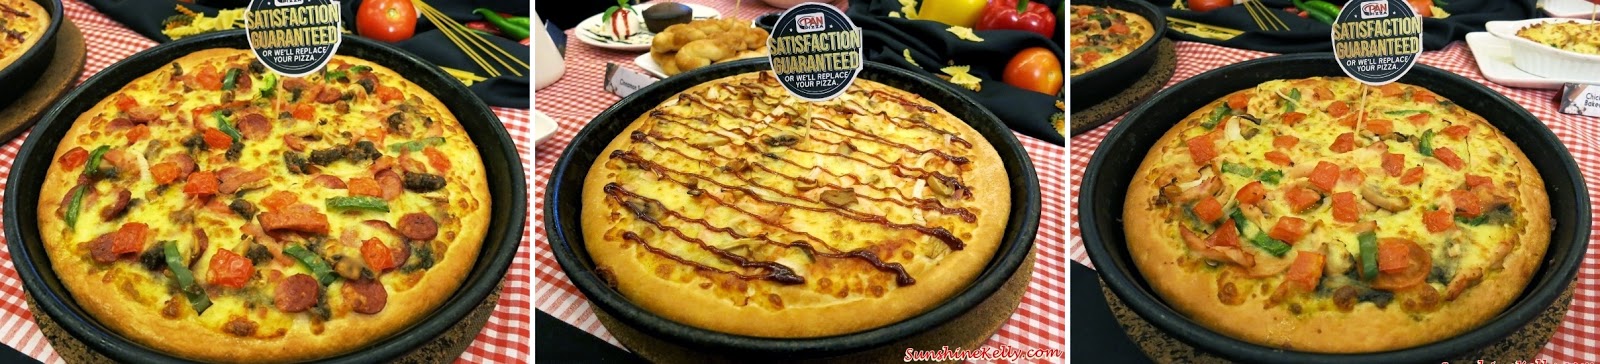 Pizza Hut New Menu & Improved Pan Pizza, Pizza Hut Malaysia, foodie malaysia, food review